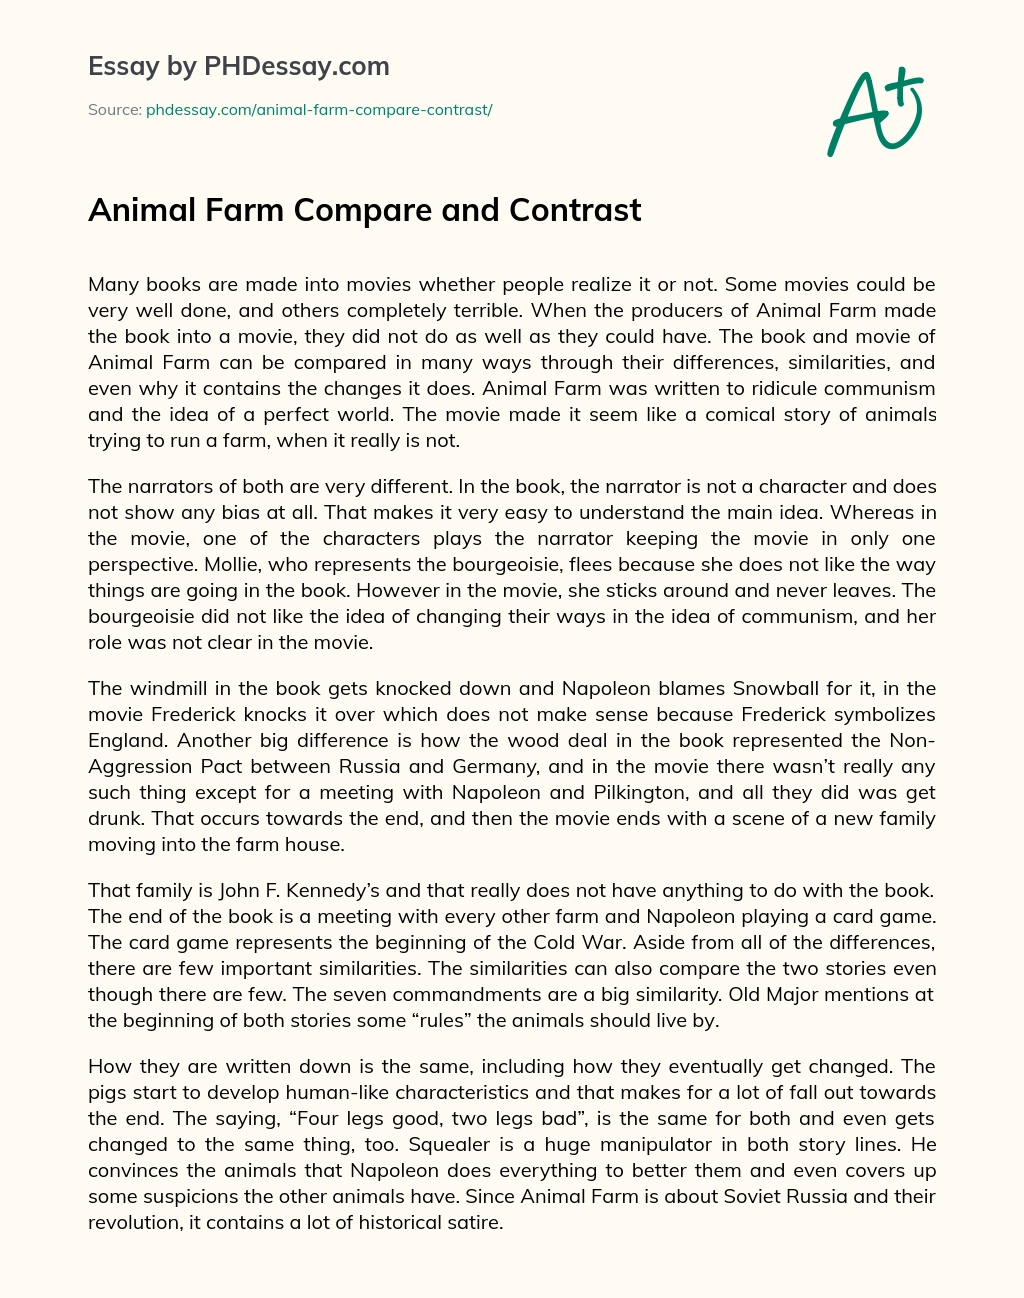 Animal Farm Compare and Contrast essay